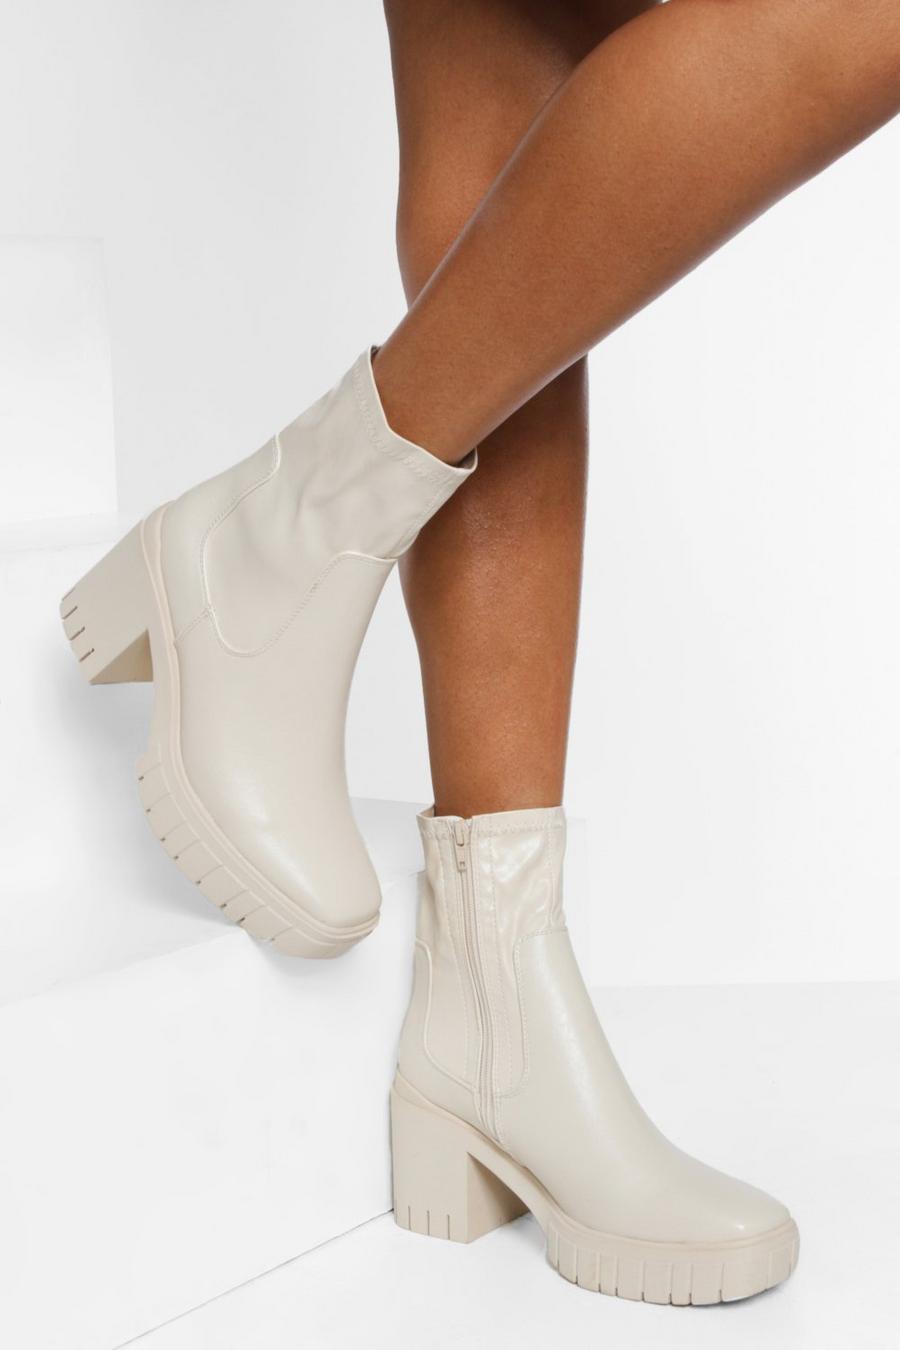 Botas calcetín gruesas, Cream blanco